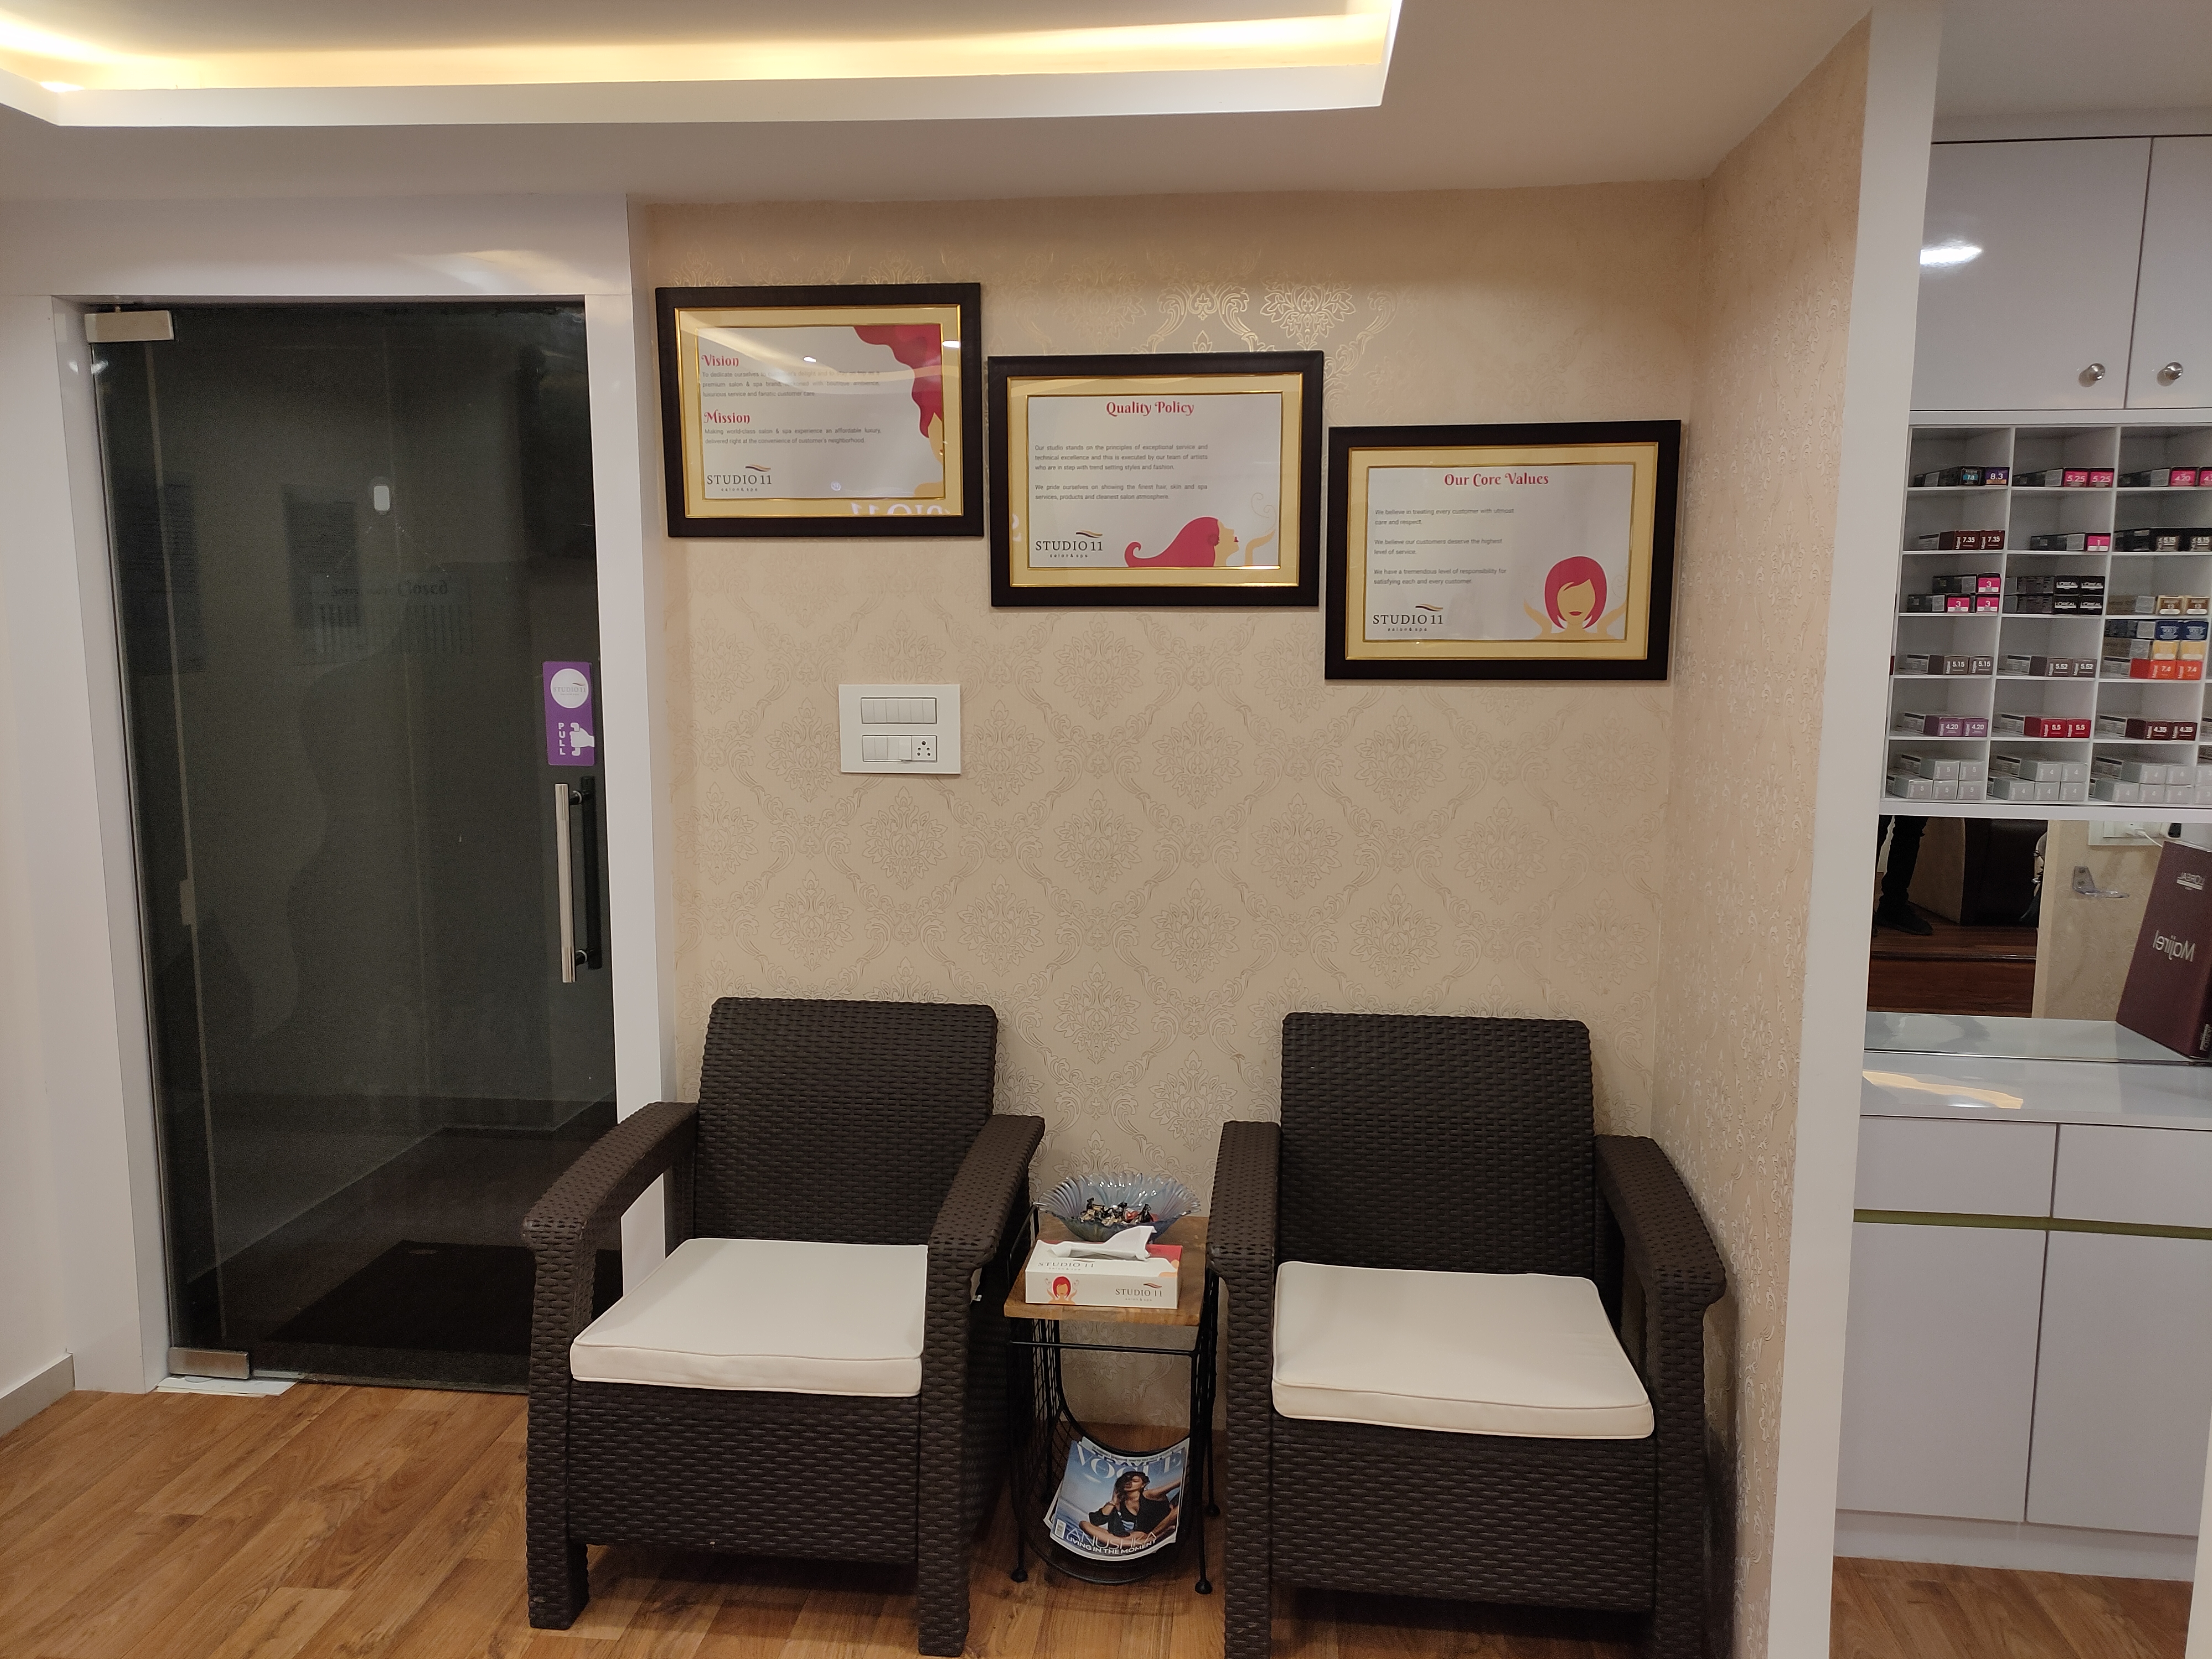 STUDIO11 Salon & Spa in Bodakdev, Ahmedabad | Hair & Beauty Salon